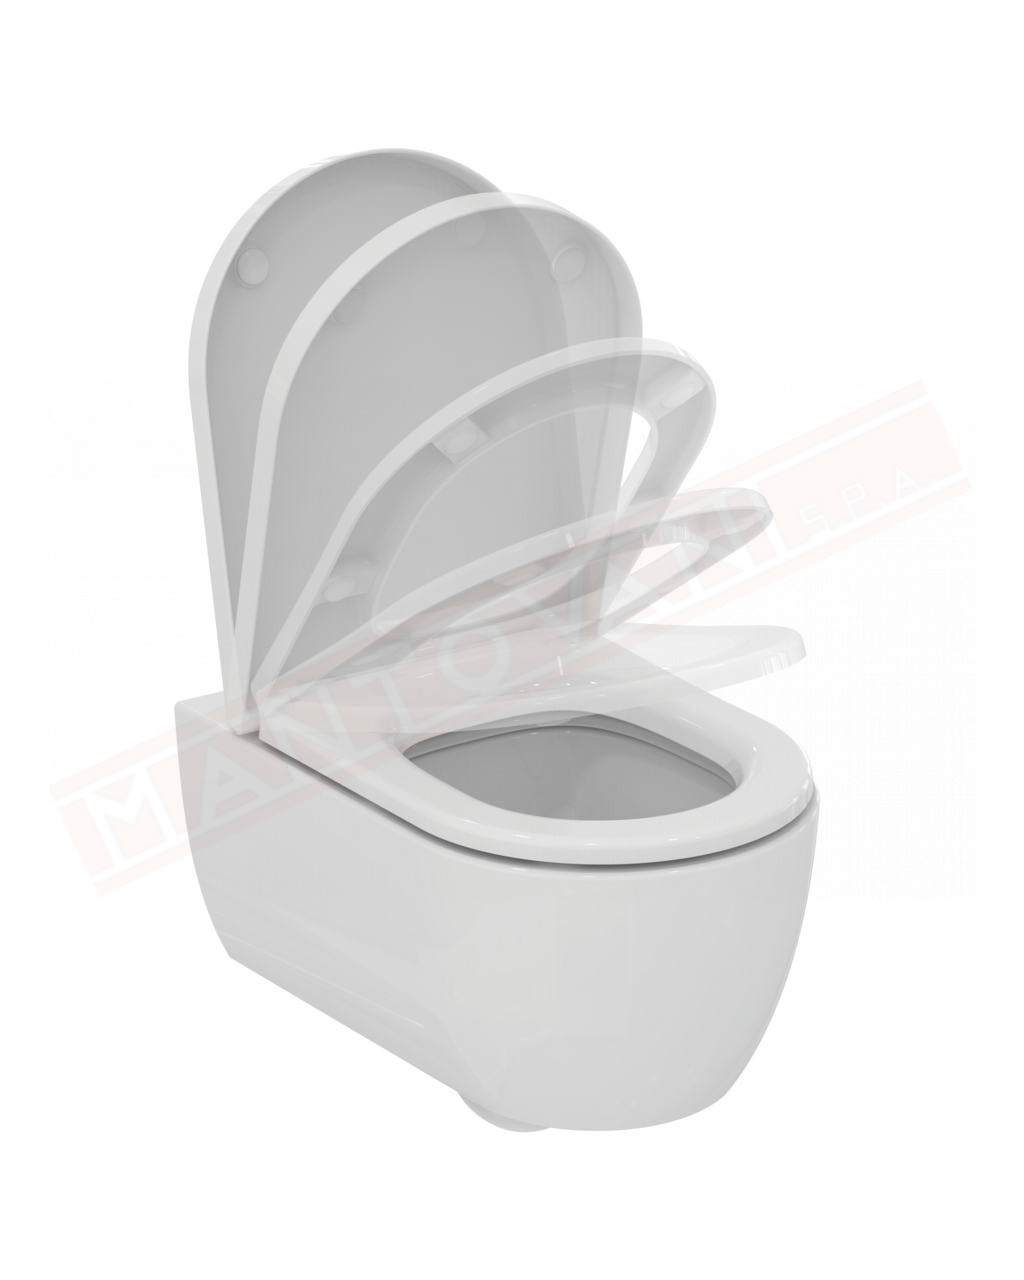 Blend curve wc sospeso Ideal Standard senza sedile 54.5X36 . Sanitari bagno